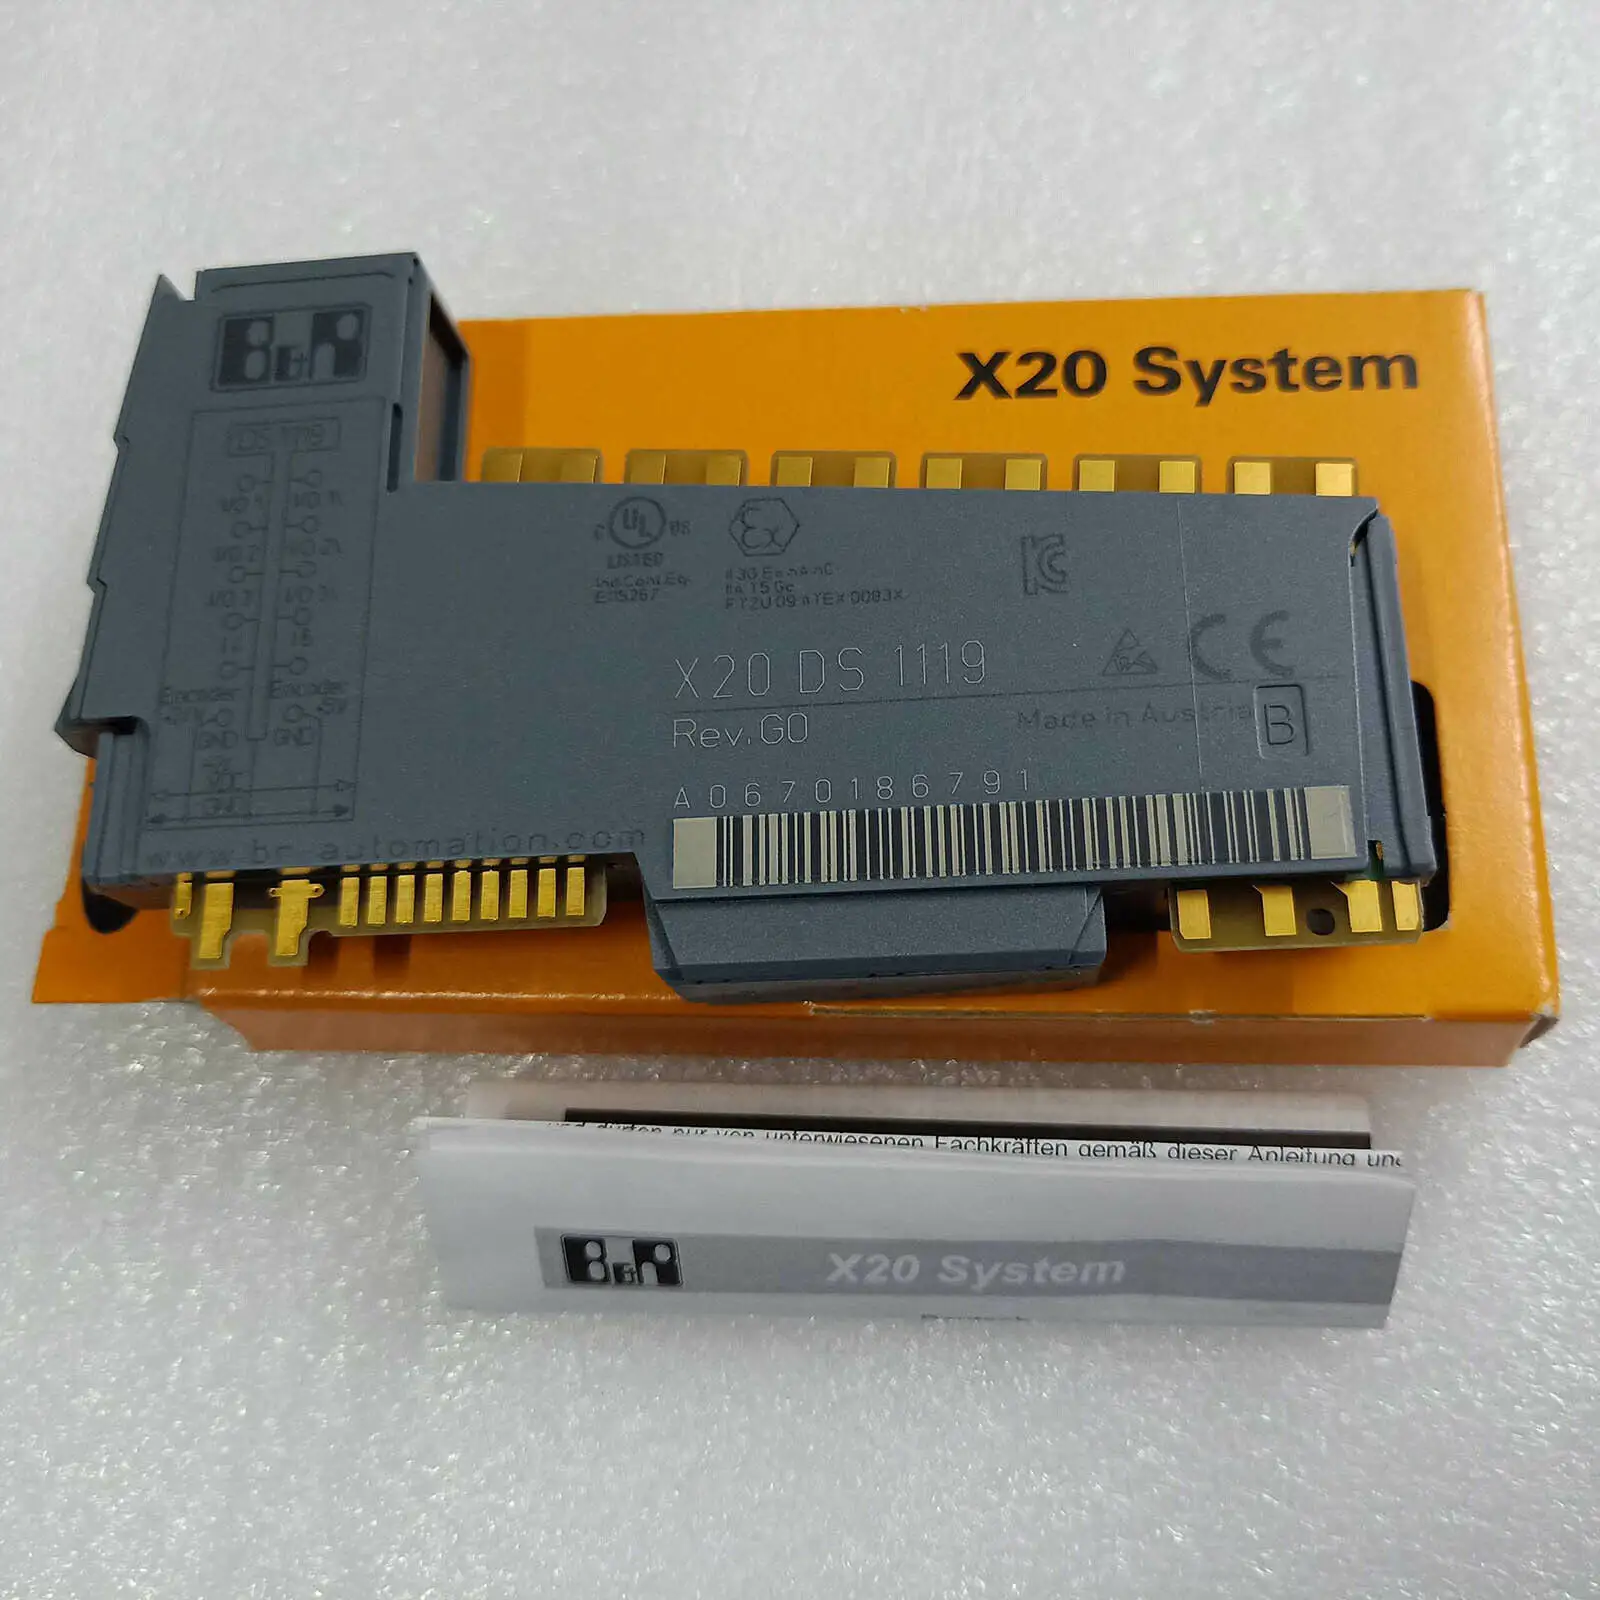 CHIDA X20 Digital multifungsi prosesor sinyal X20DS1119 untuk B & R